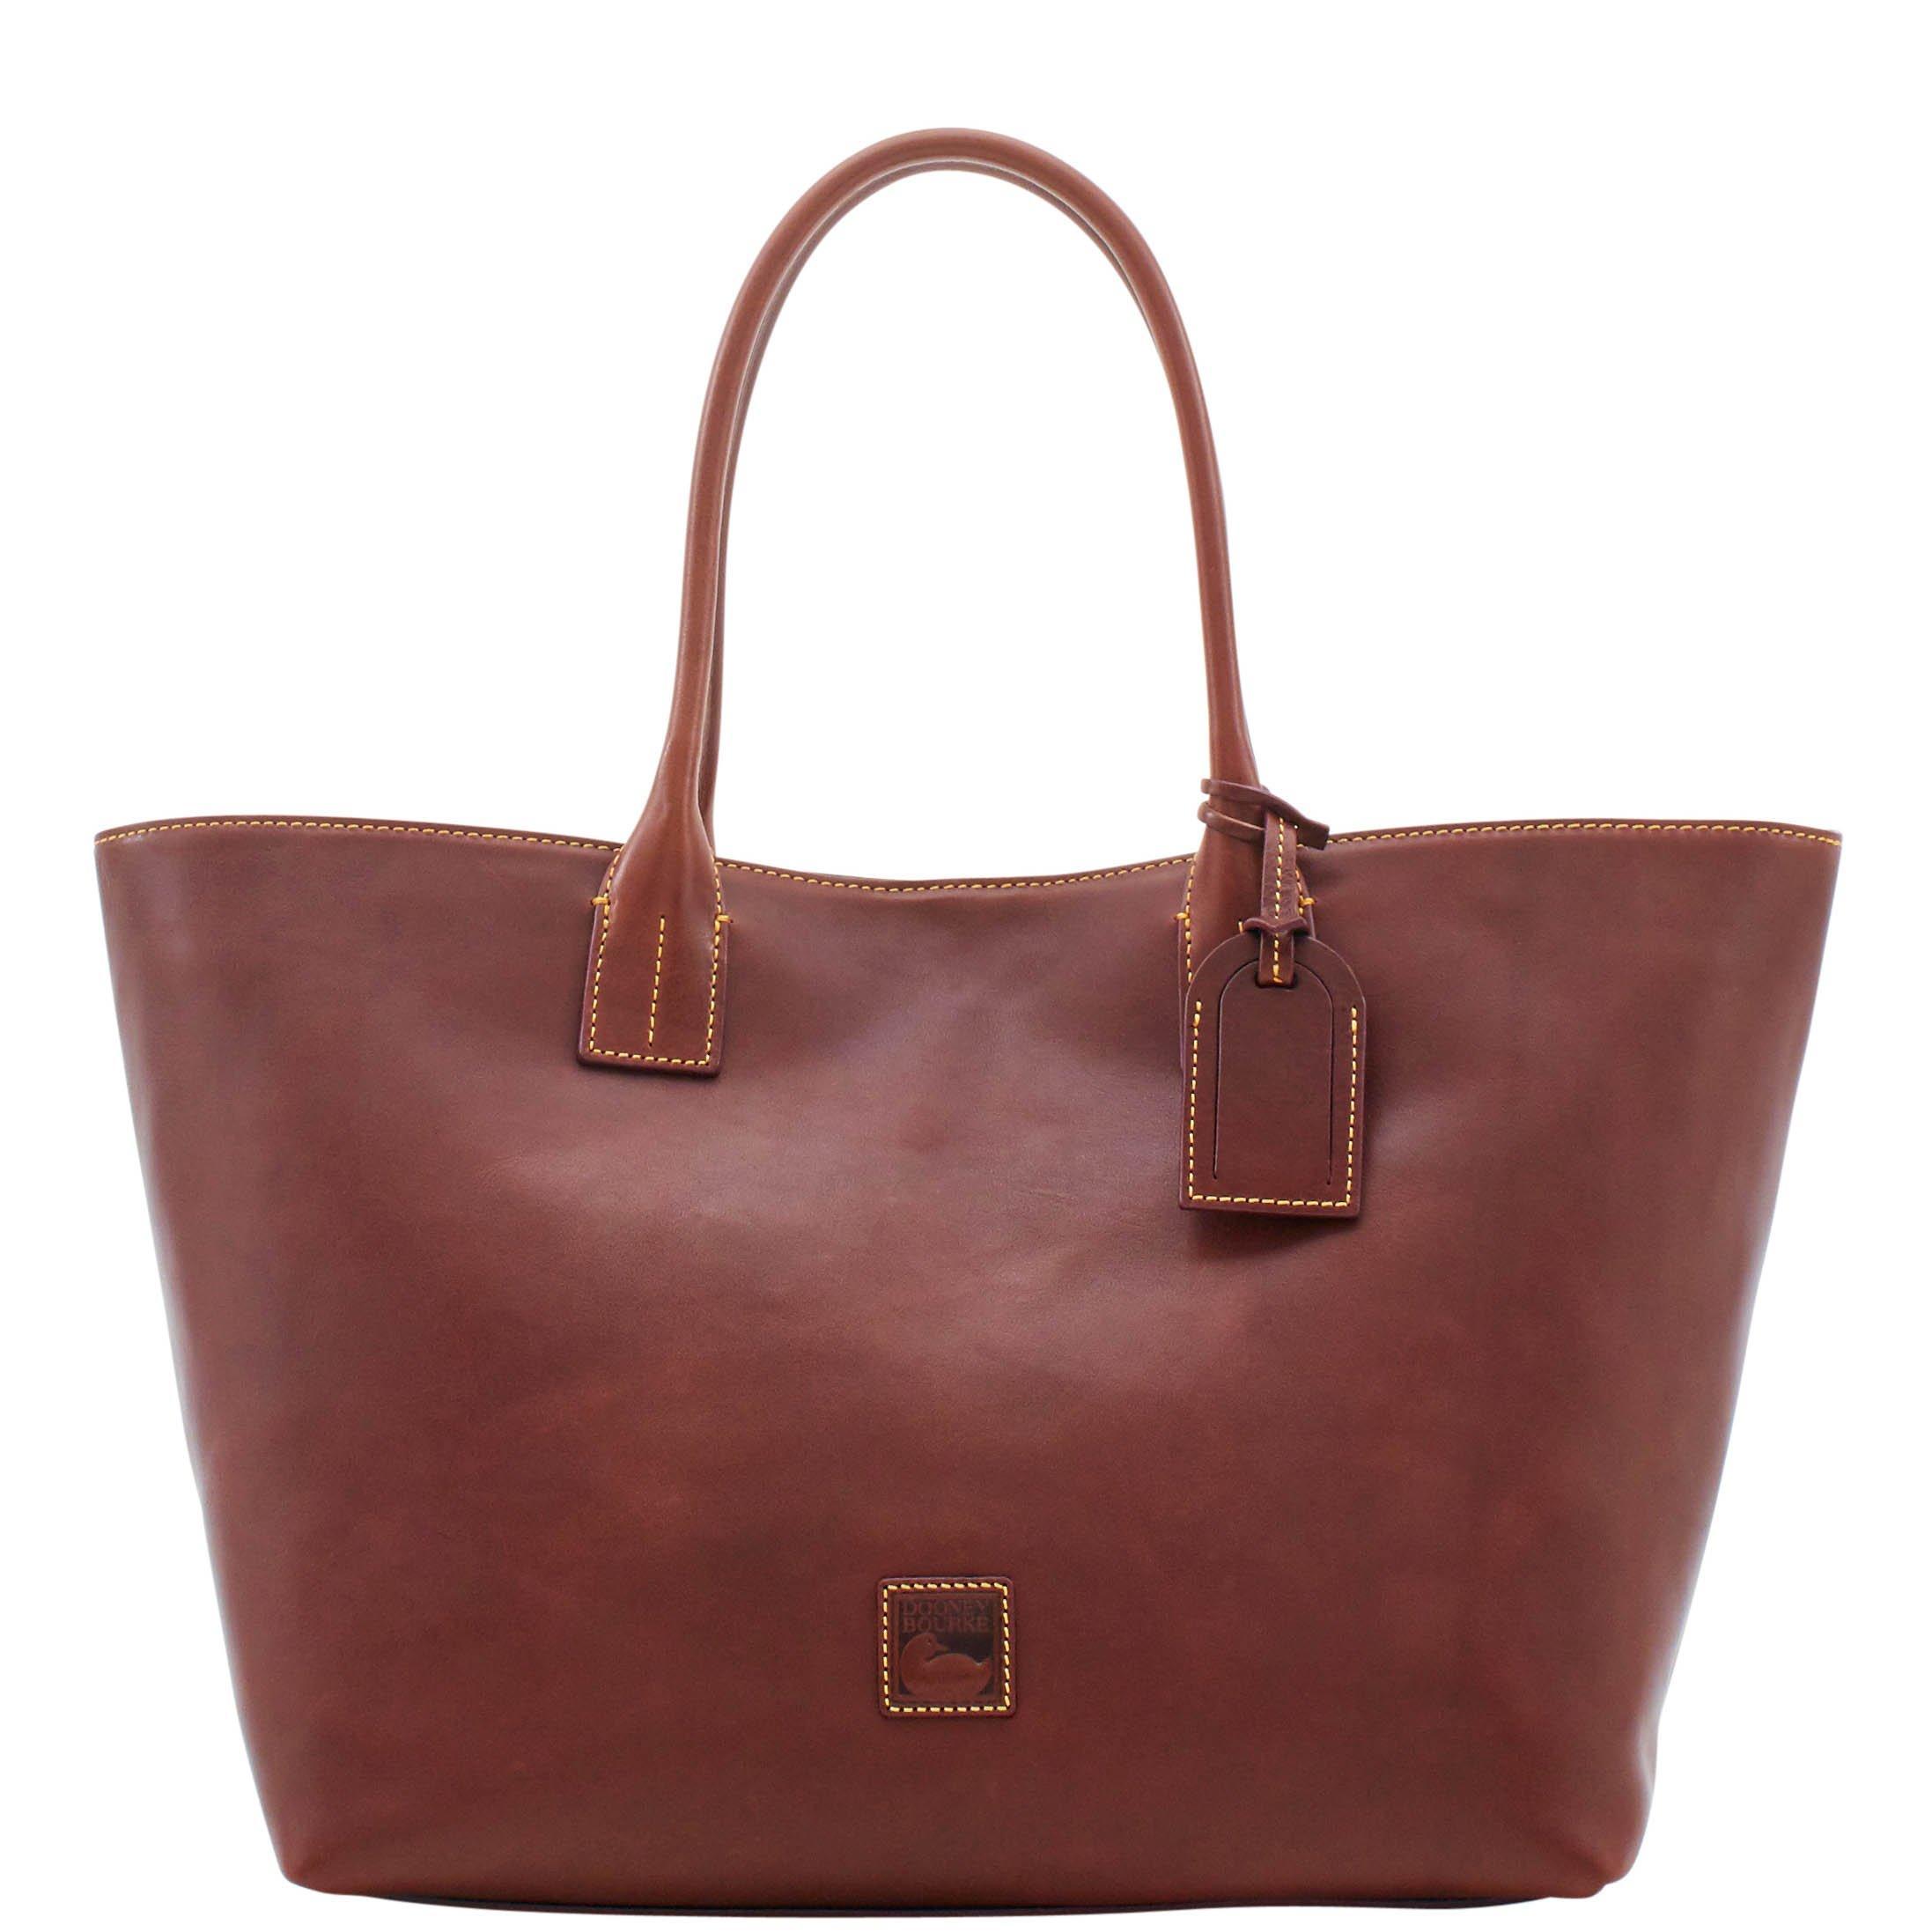 Dooney & Bourke Florentine Medium Russel Bag in Brown - Lyst